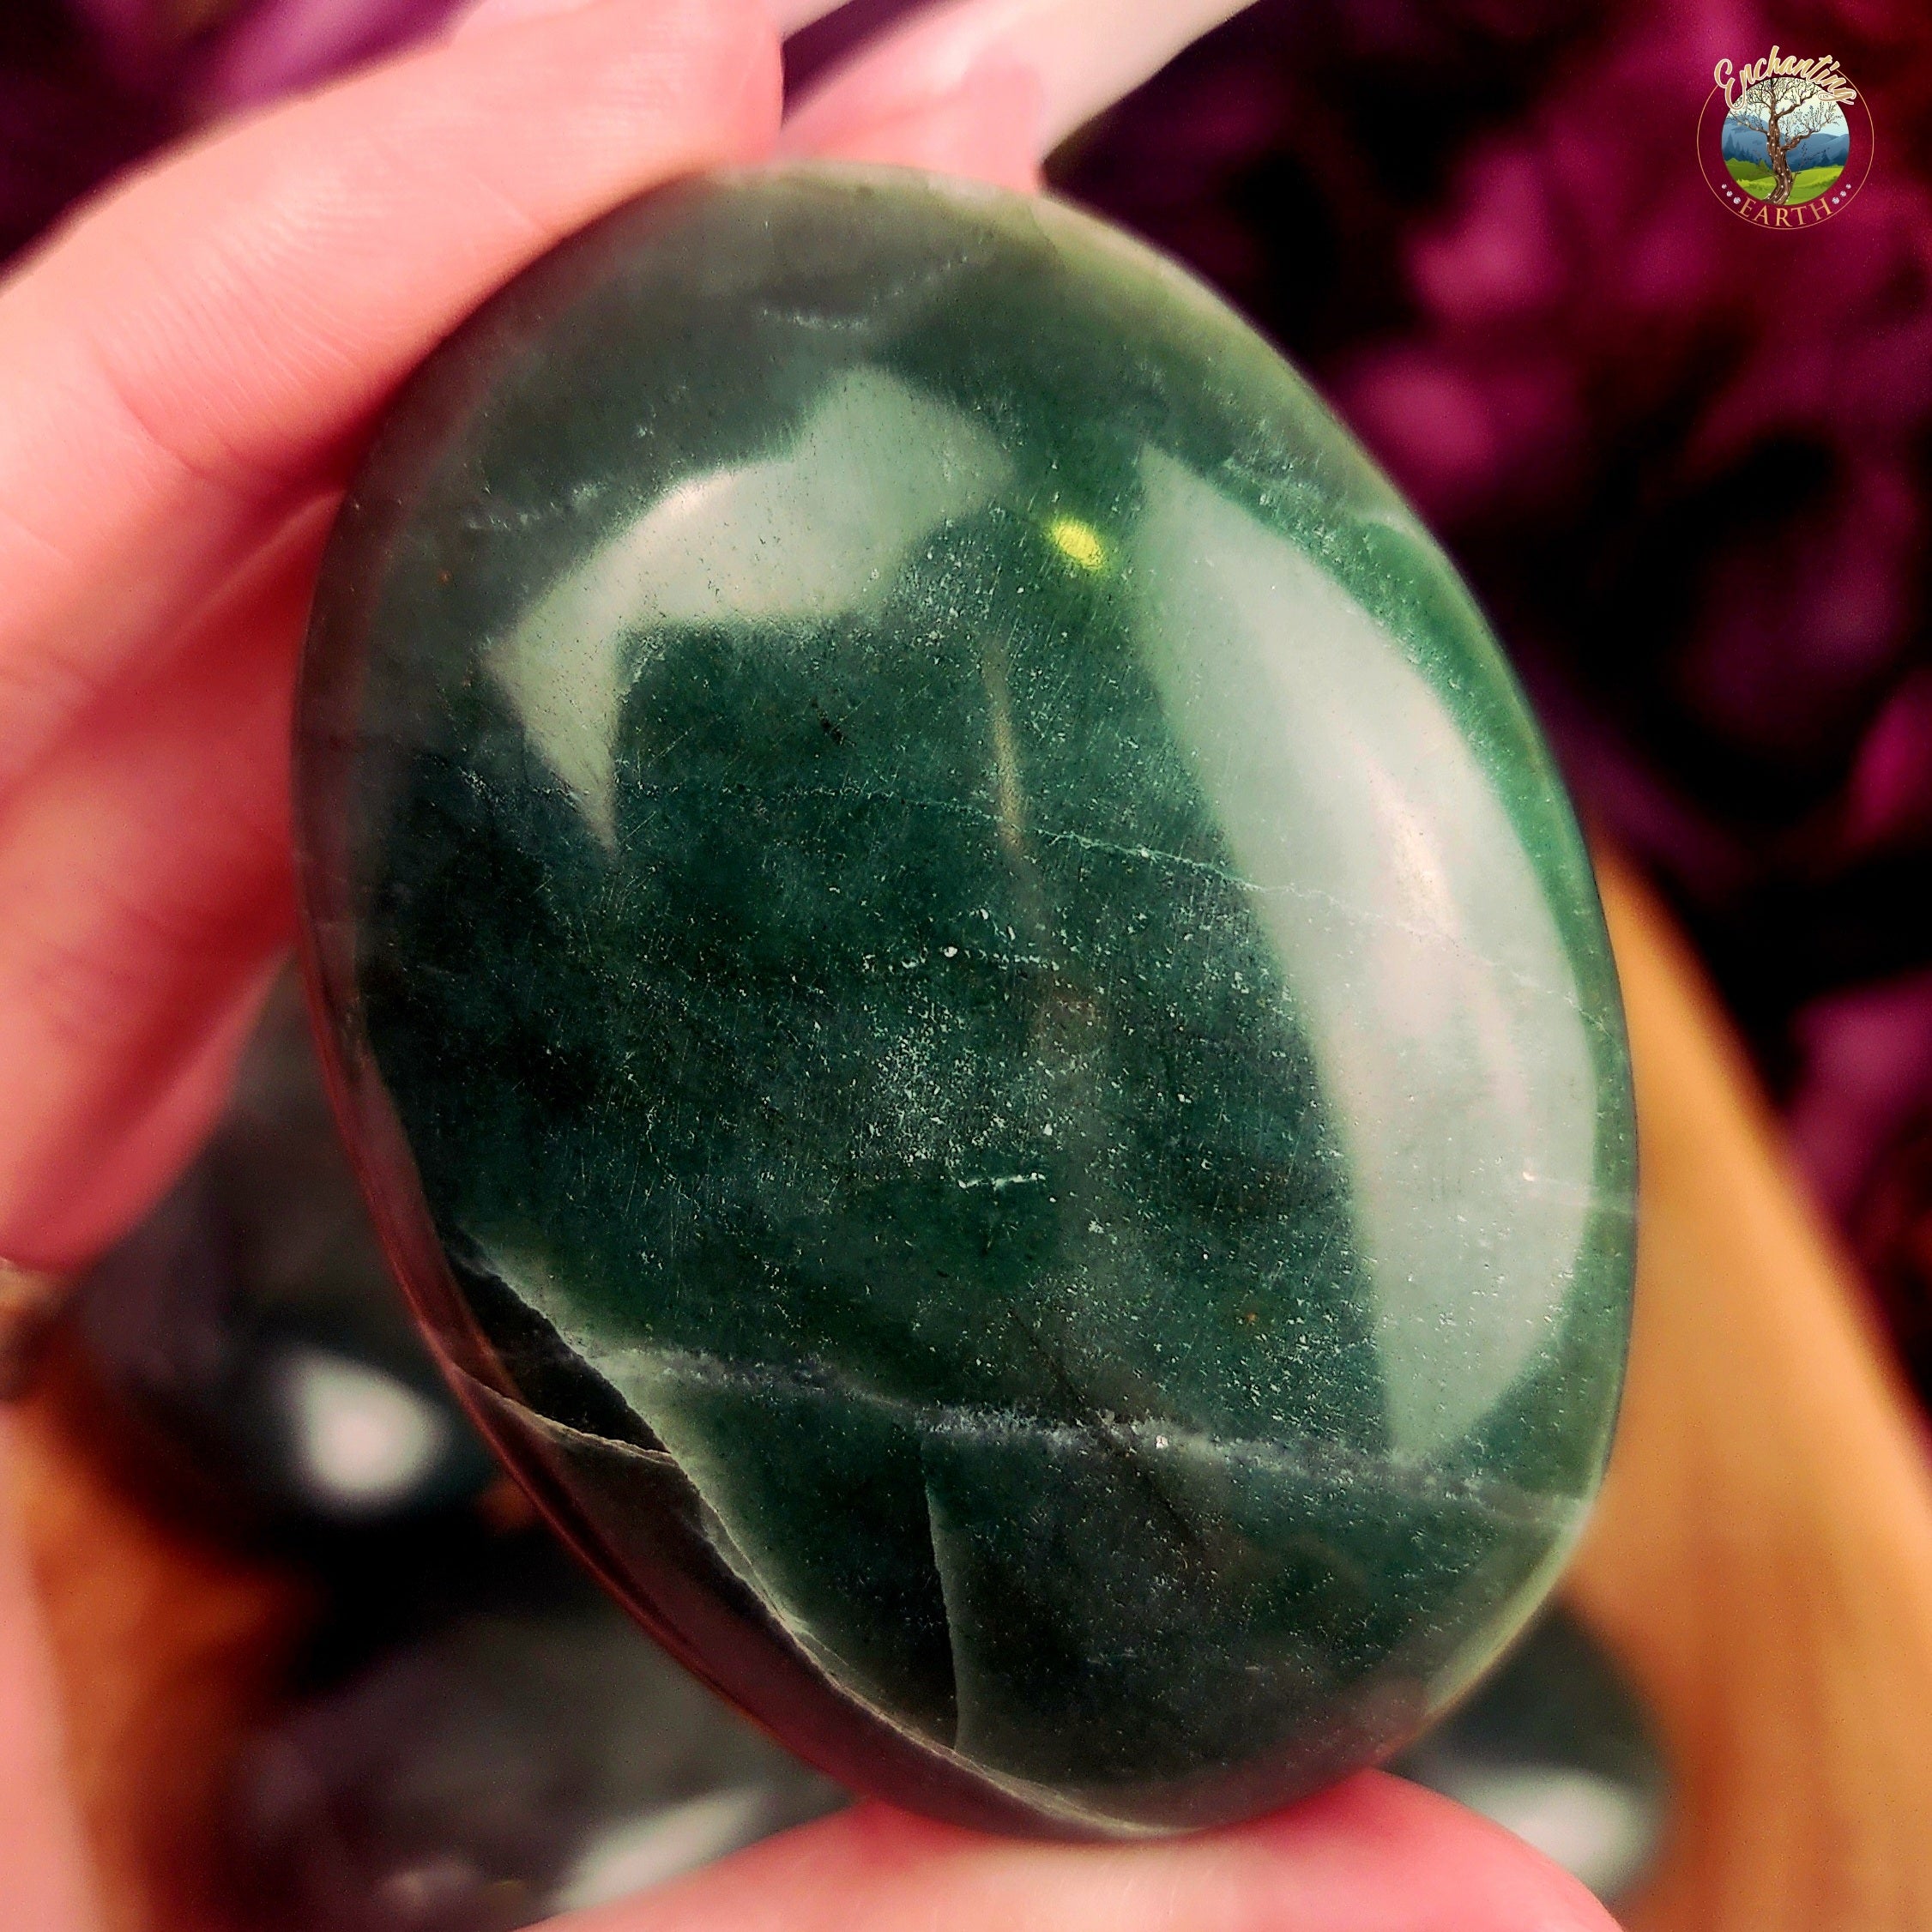 Green Aventurine Palm Stone (High Quality) for Abundance, Good Luck and Joy